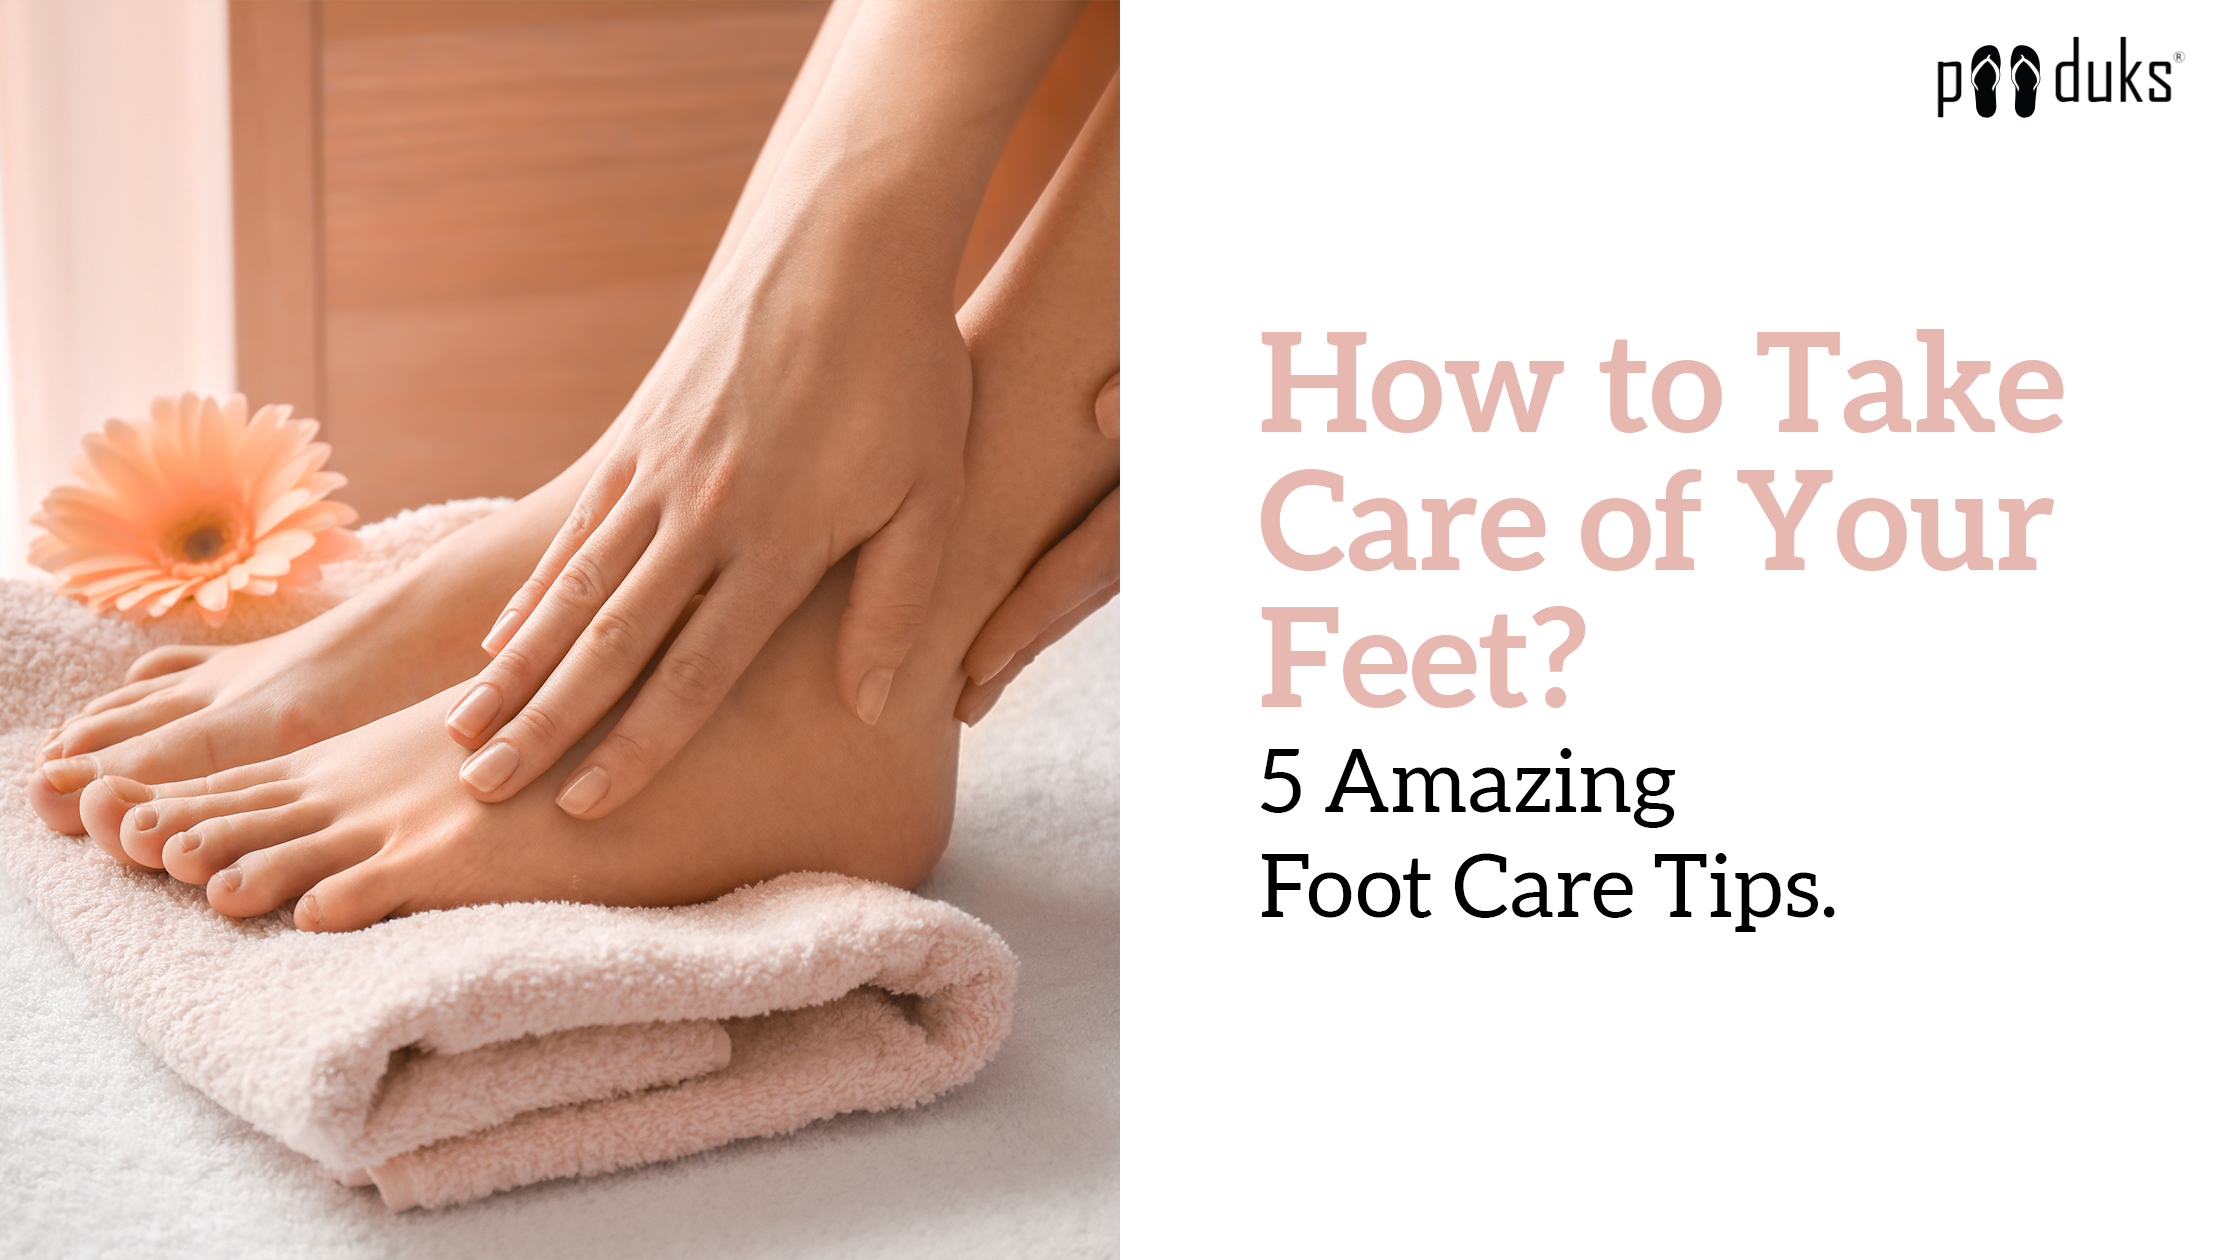 pg 9 duks

5 Amazing
Foot Care Tips.